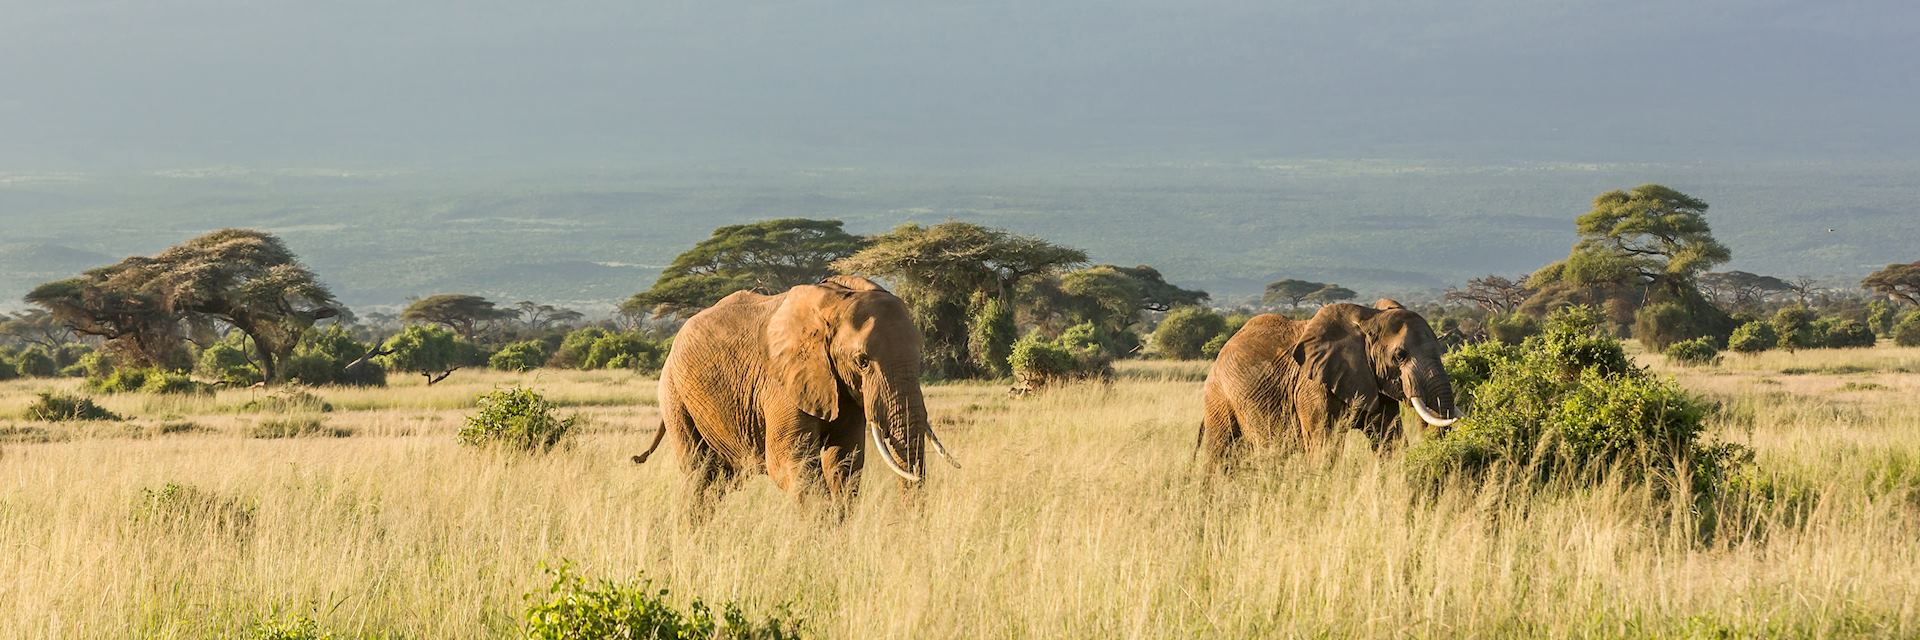 Elephants near Mt Kilimanjaro